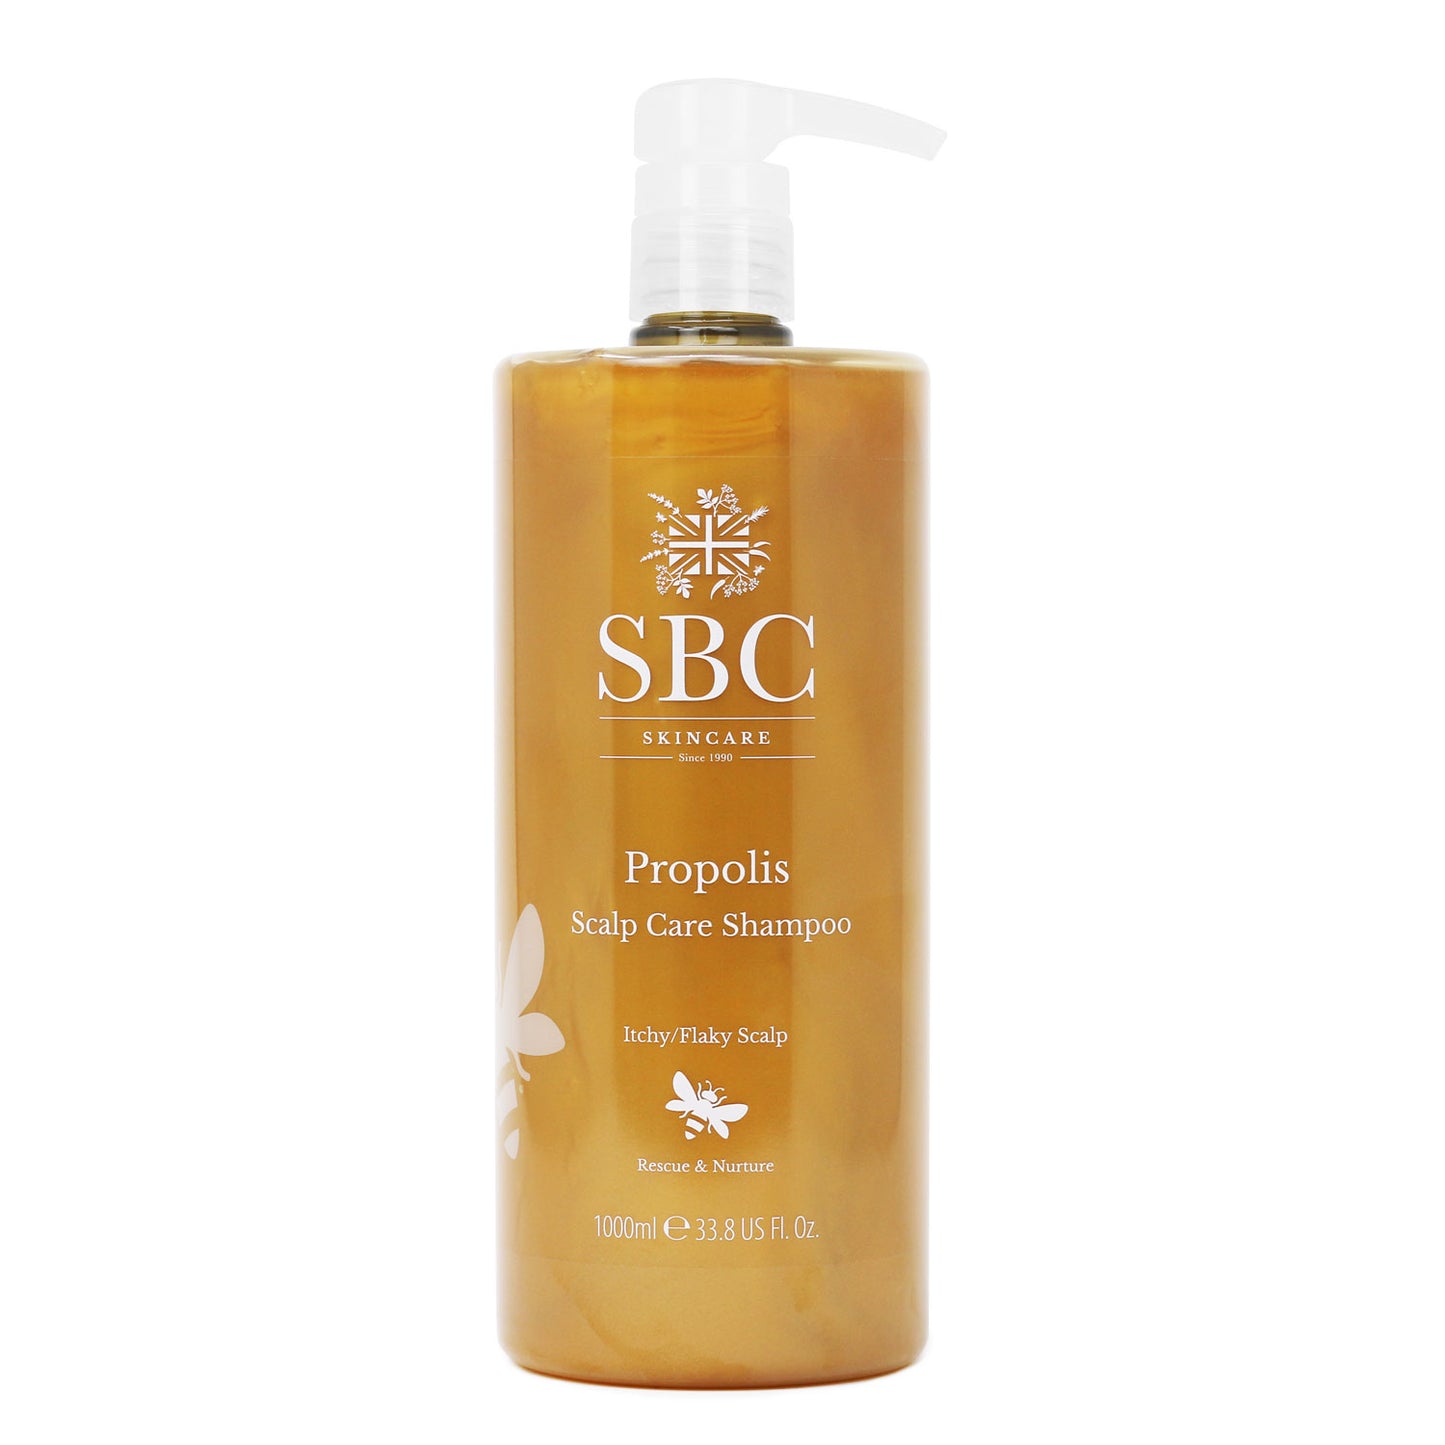 Propolis Scalp Care Shampoo